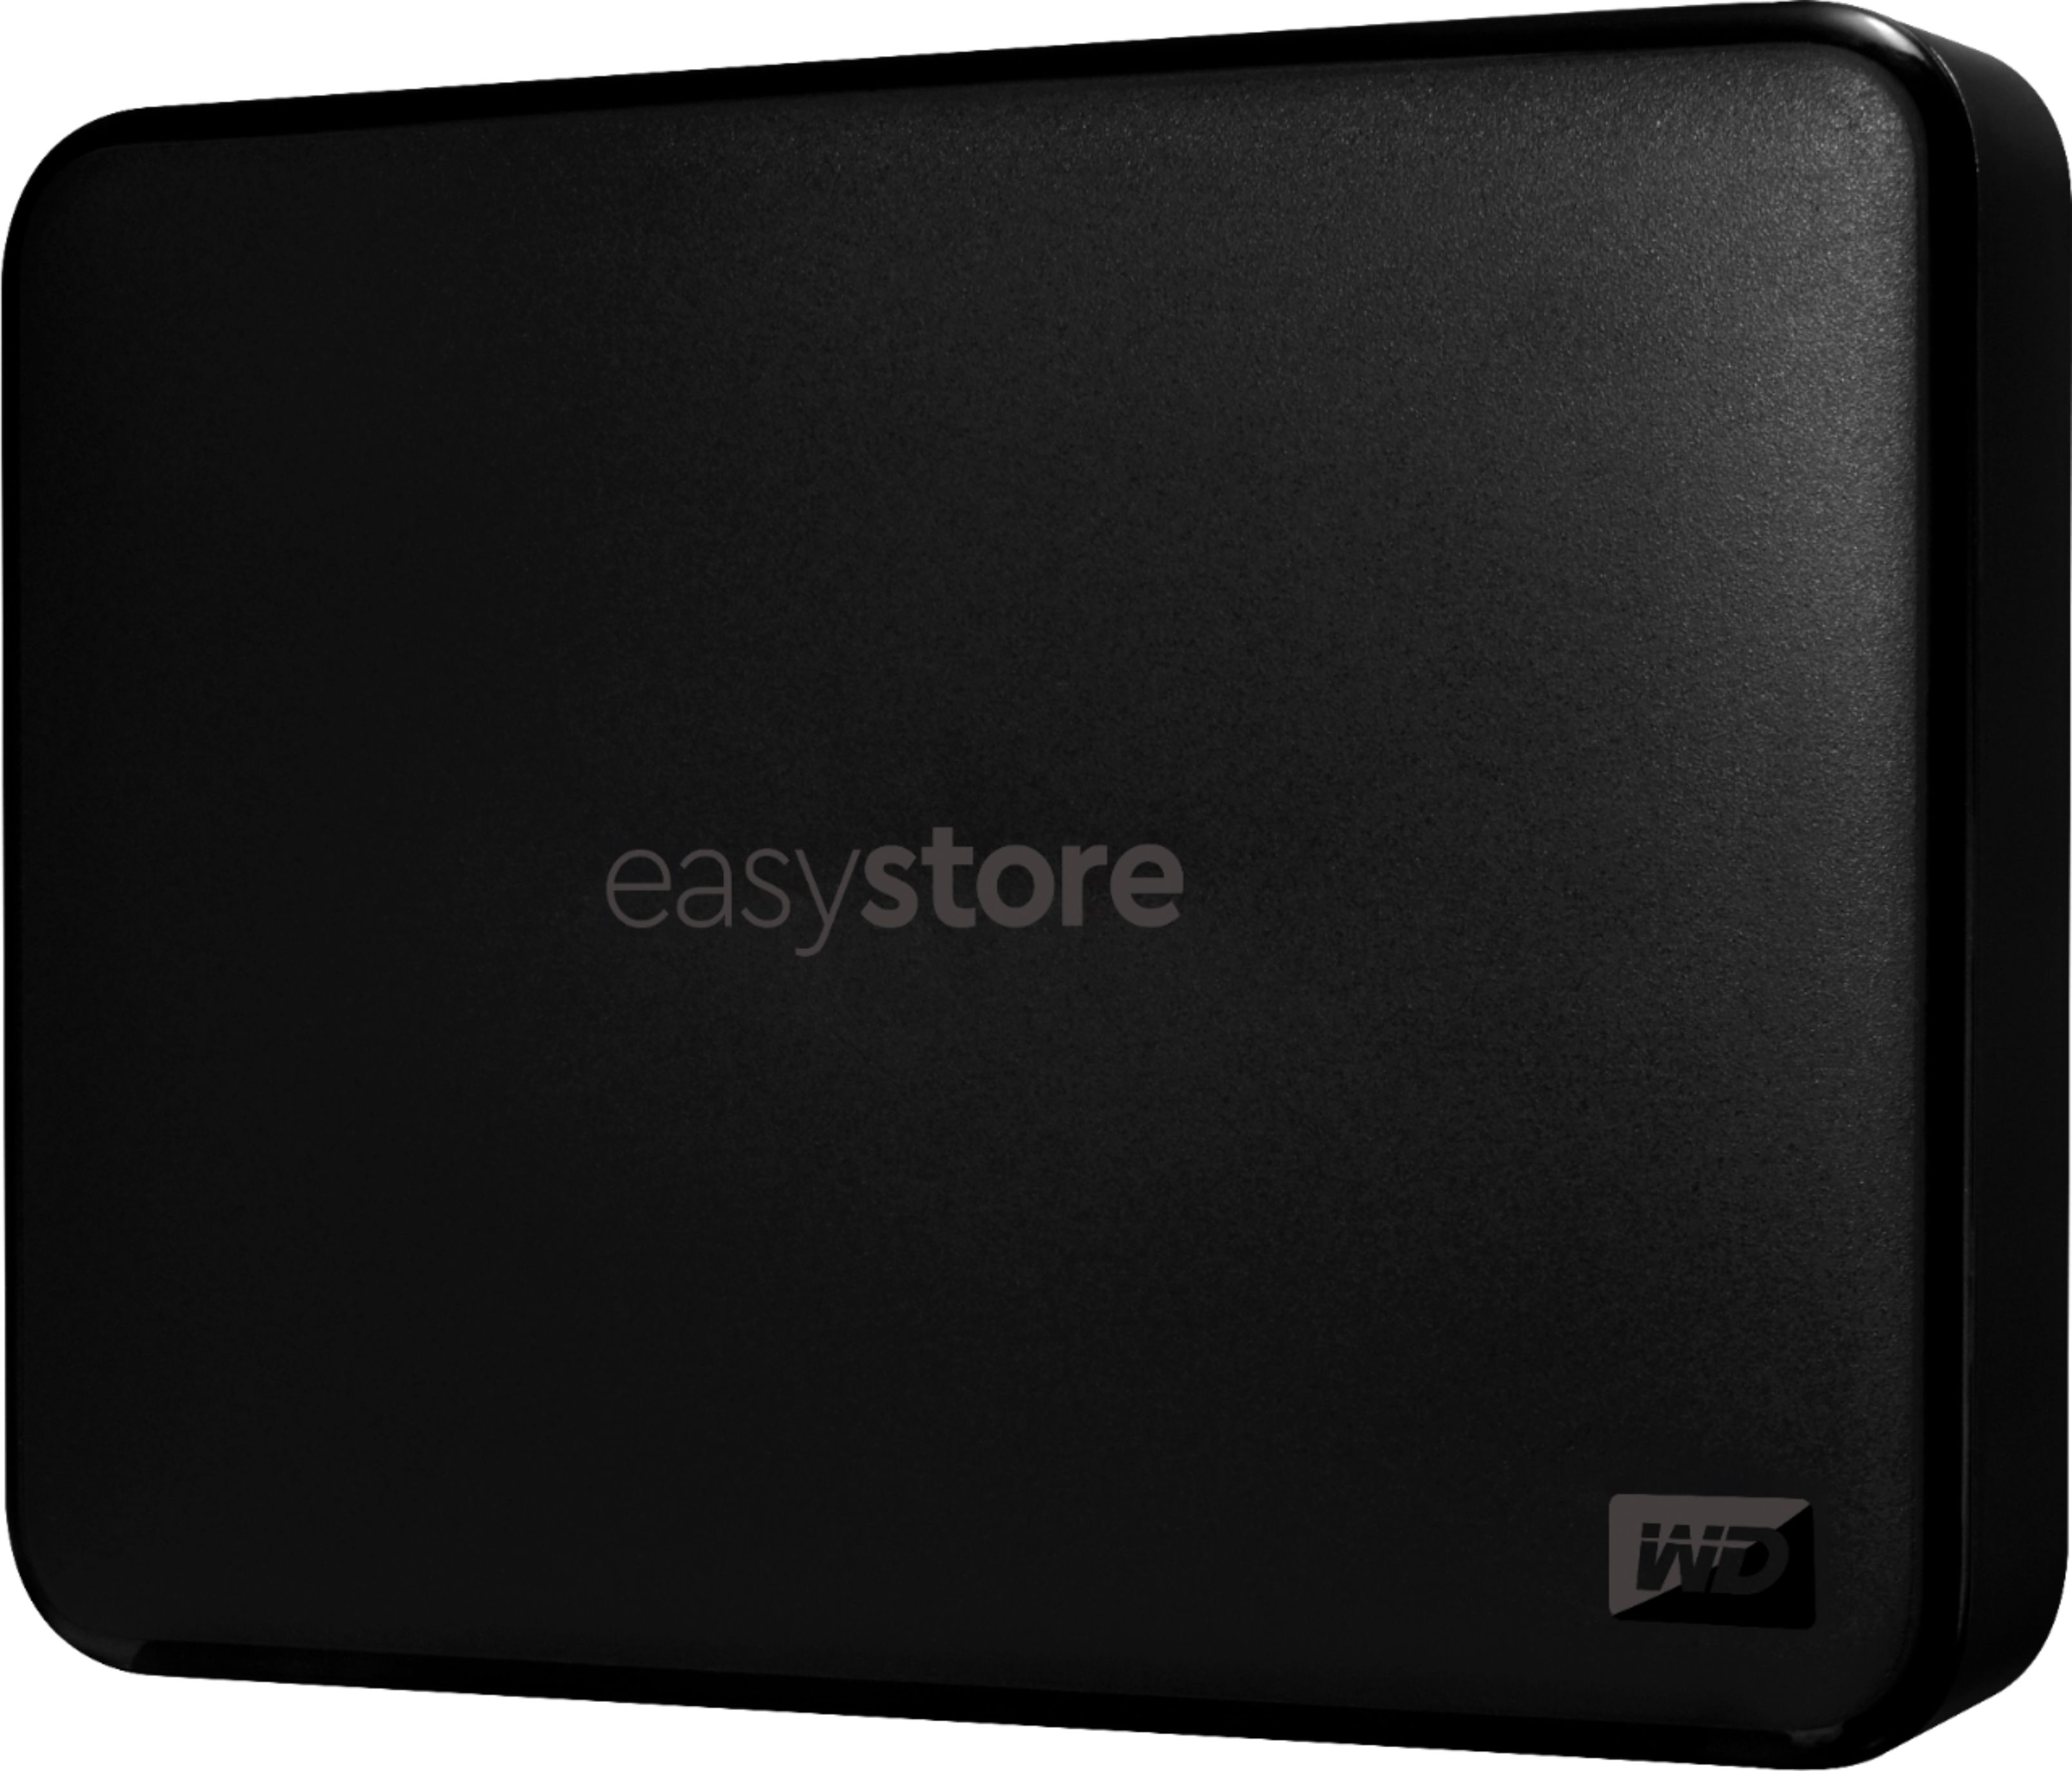 Sige Gæsterne Sinis WD Easystore 4TB External USB 3.0 Portable Hard Drive Black  WDBAJP0040BBK-WESN - Best Buy